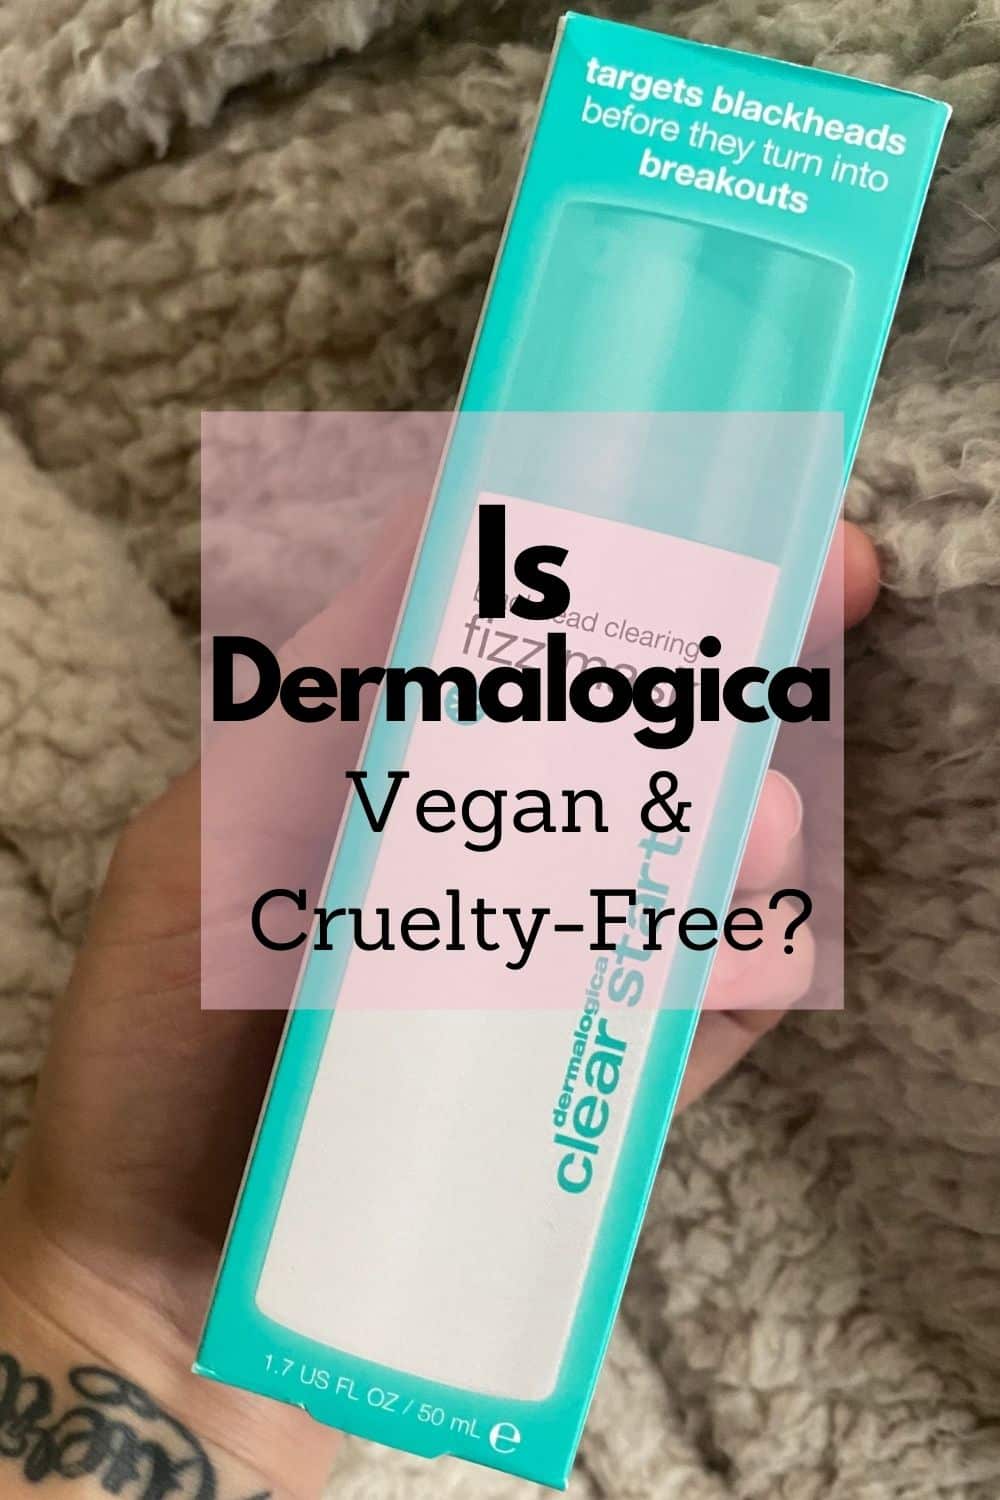 Dermalogica Vegan Product List (Cruelty-Free)